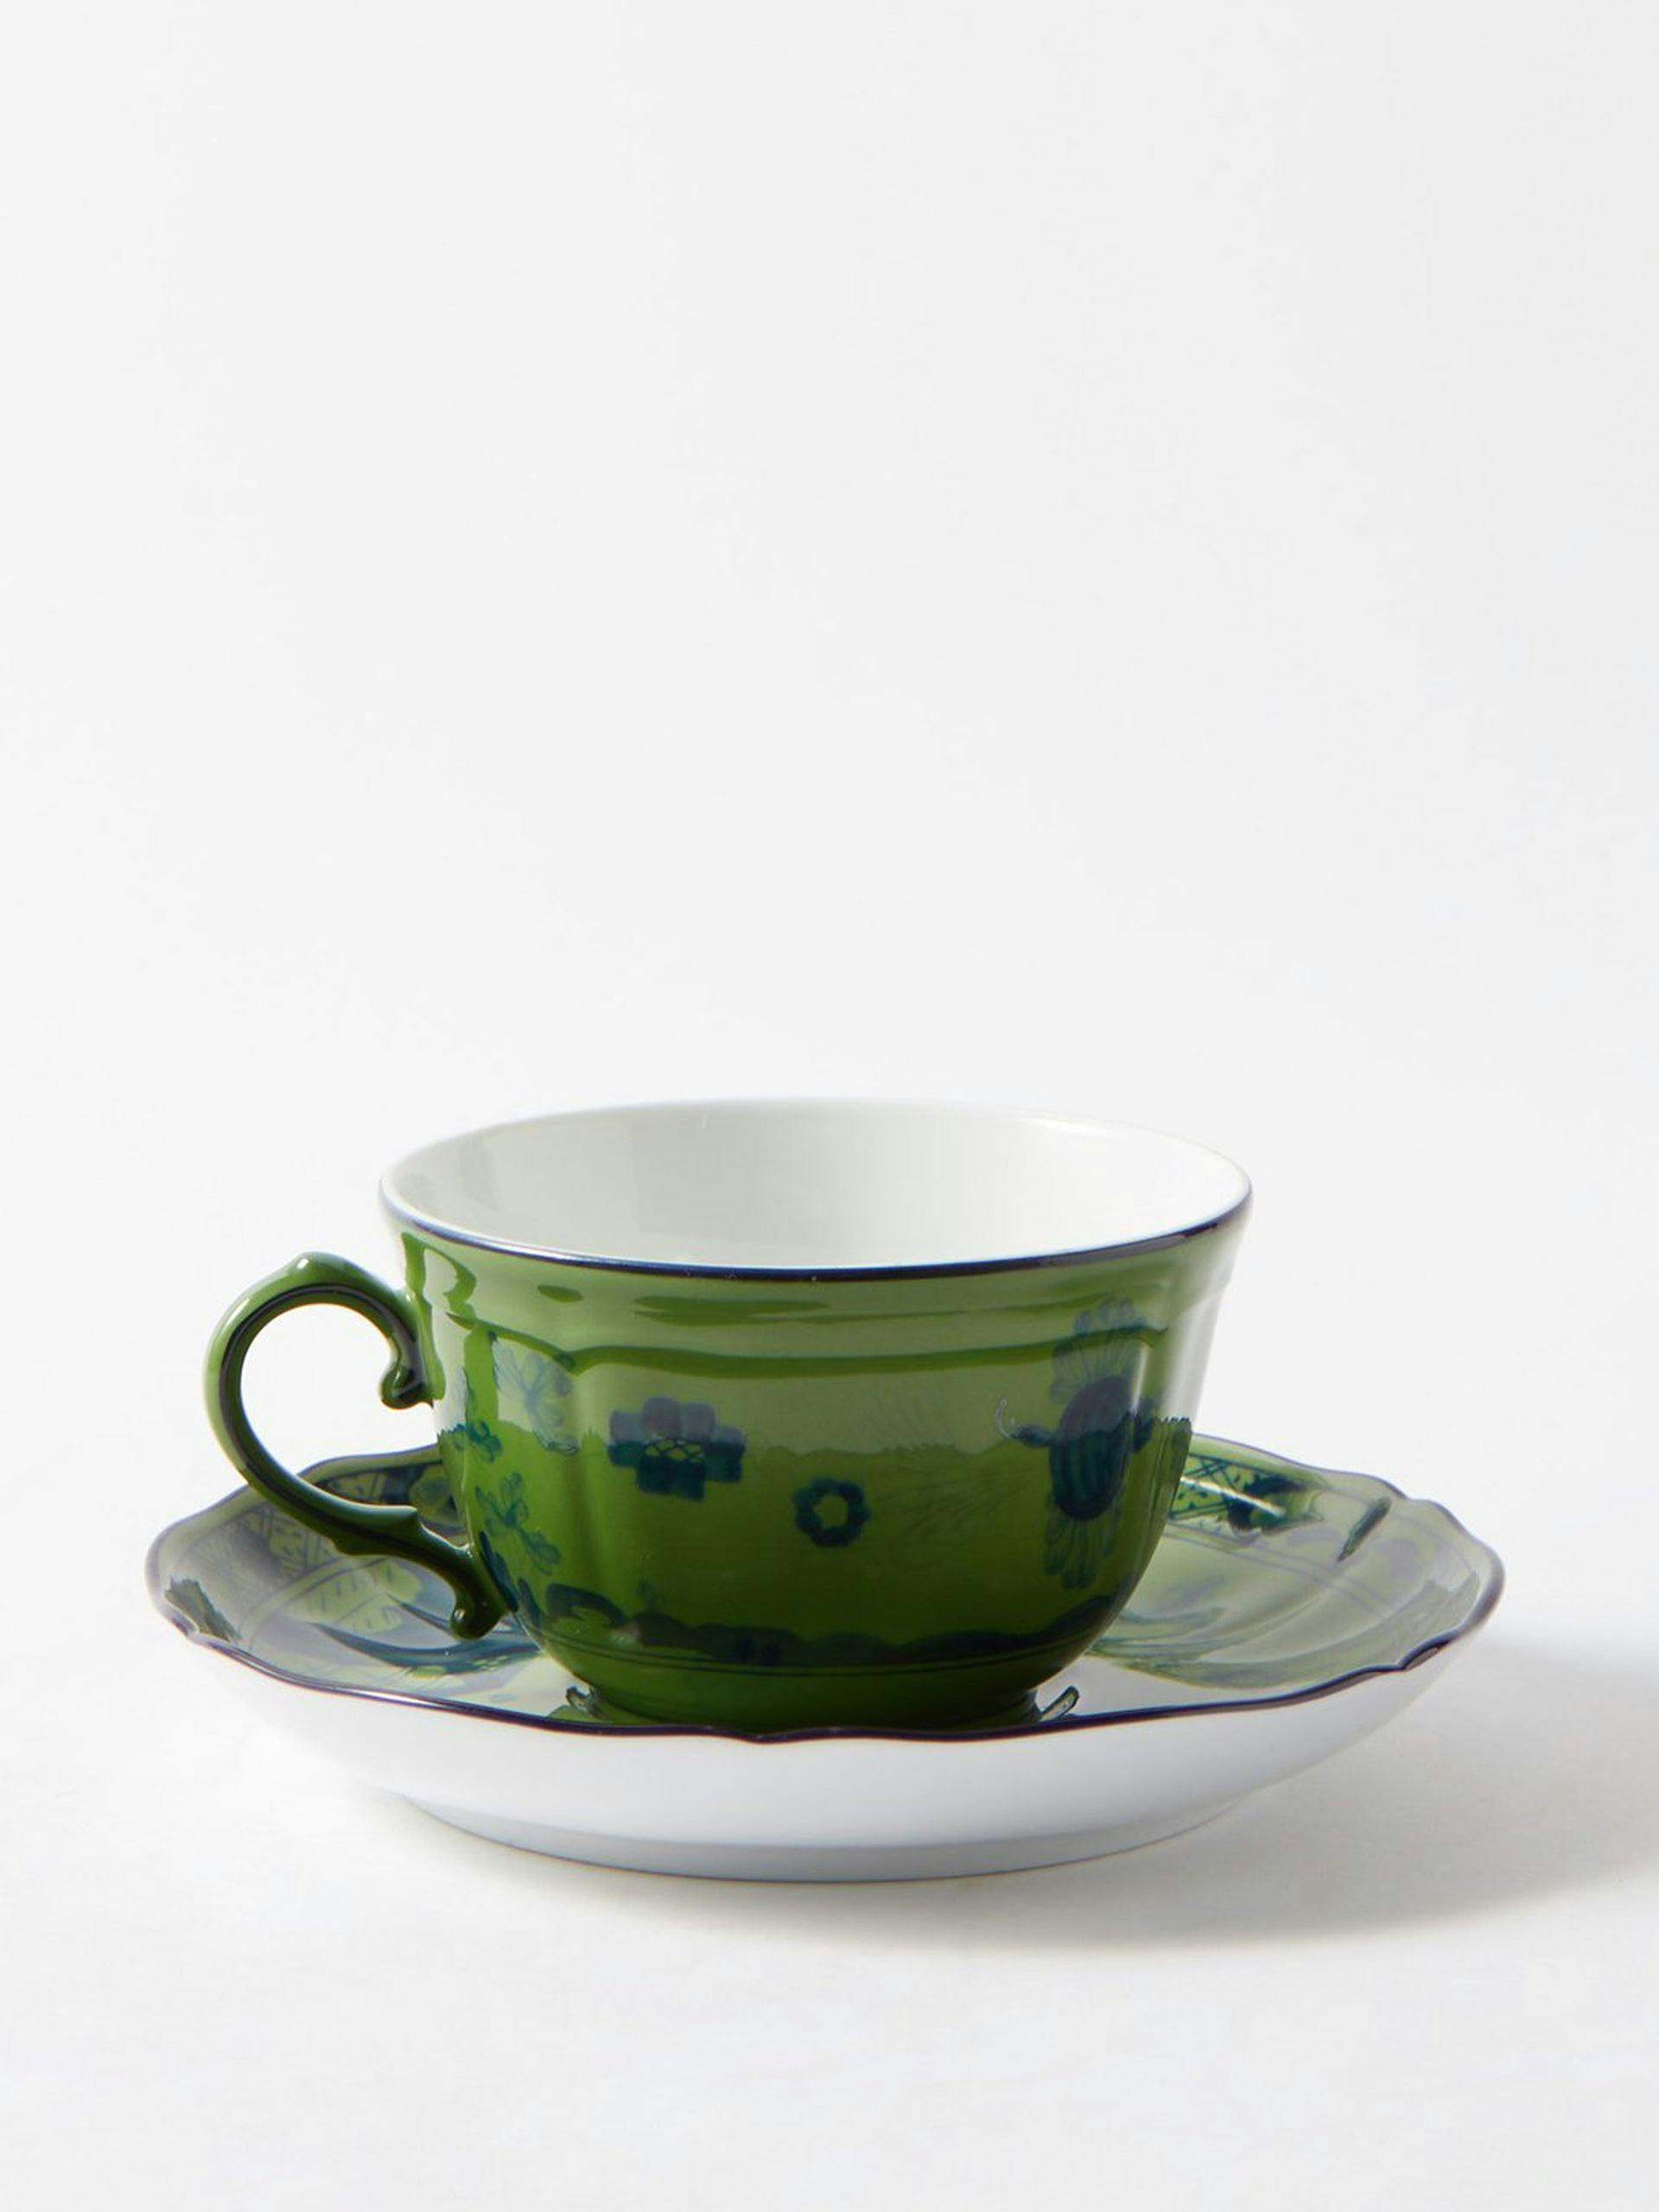 Porcelain teacup and saucer